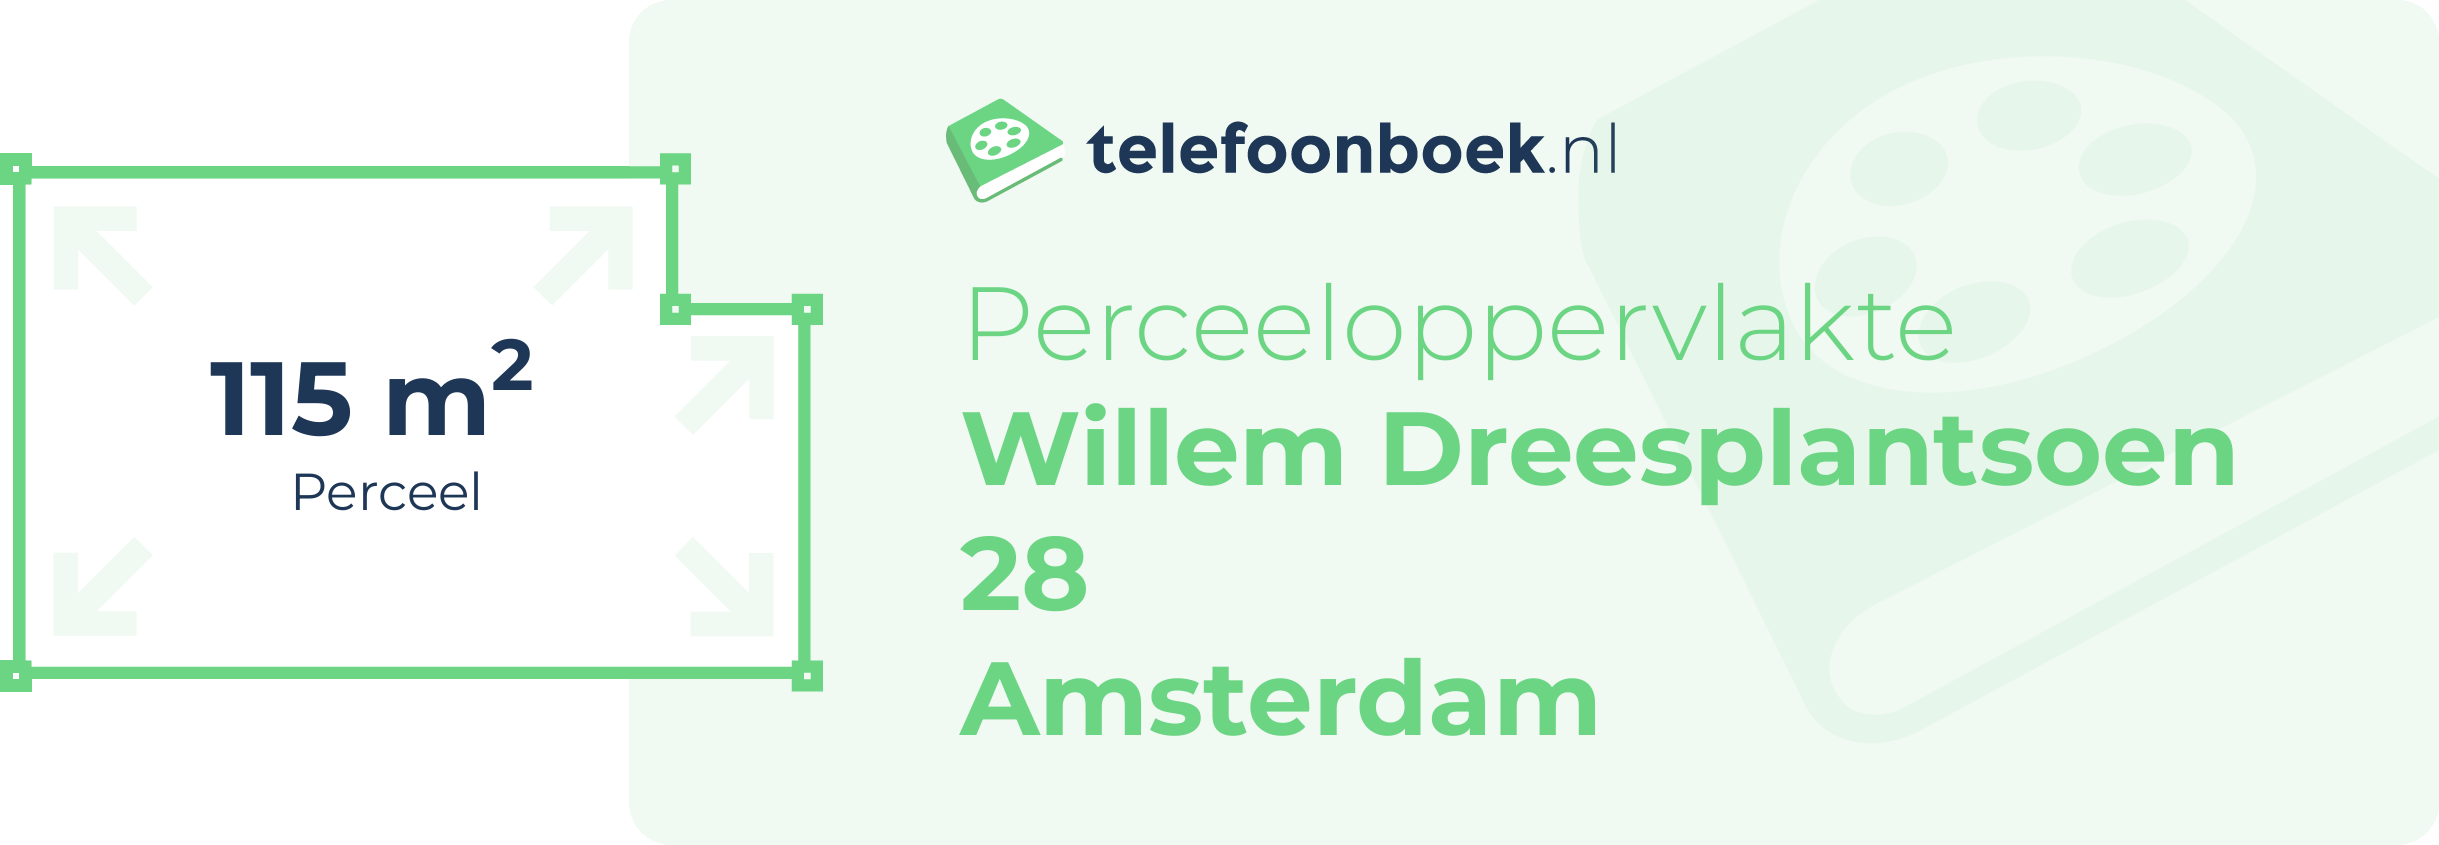 Perceeloppervlakte Willem Dreesplantsoen 28 Amsterdam